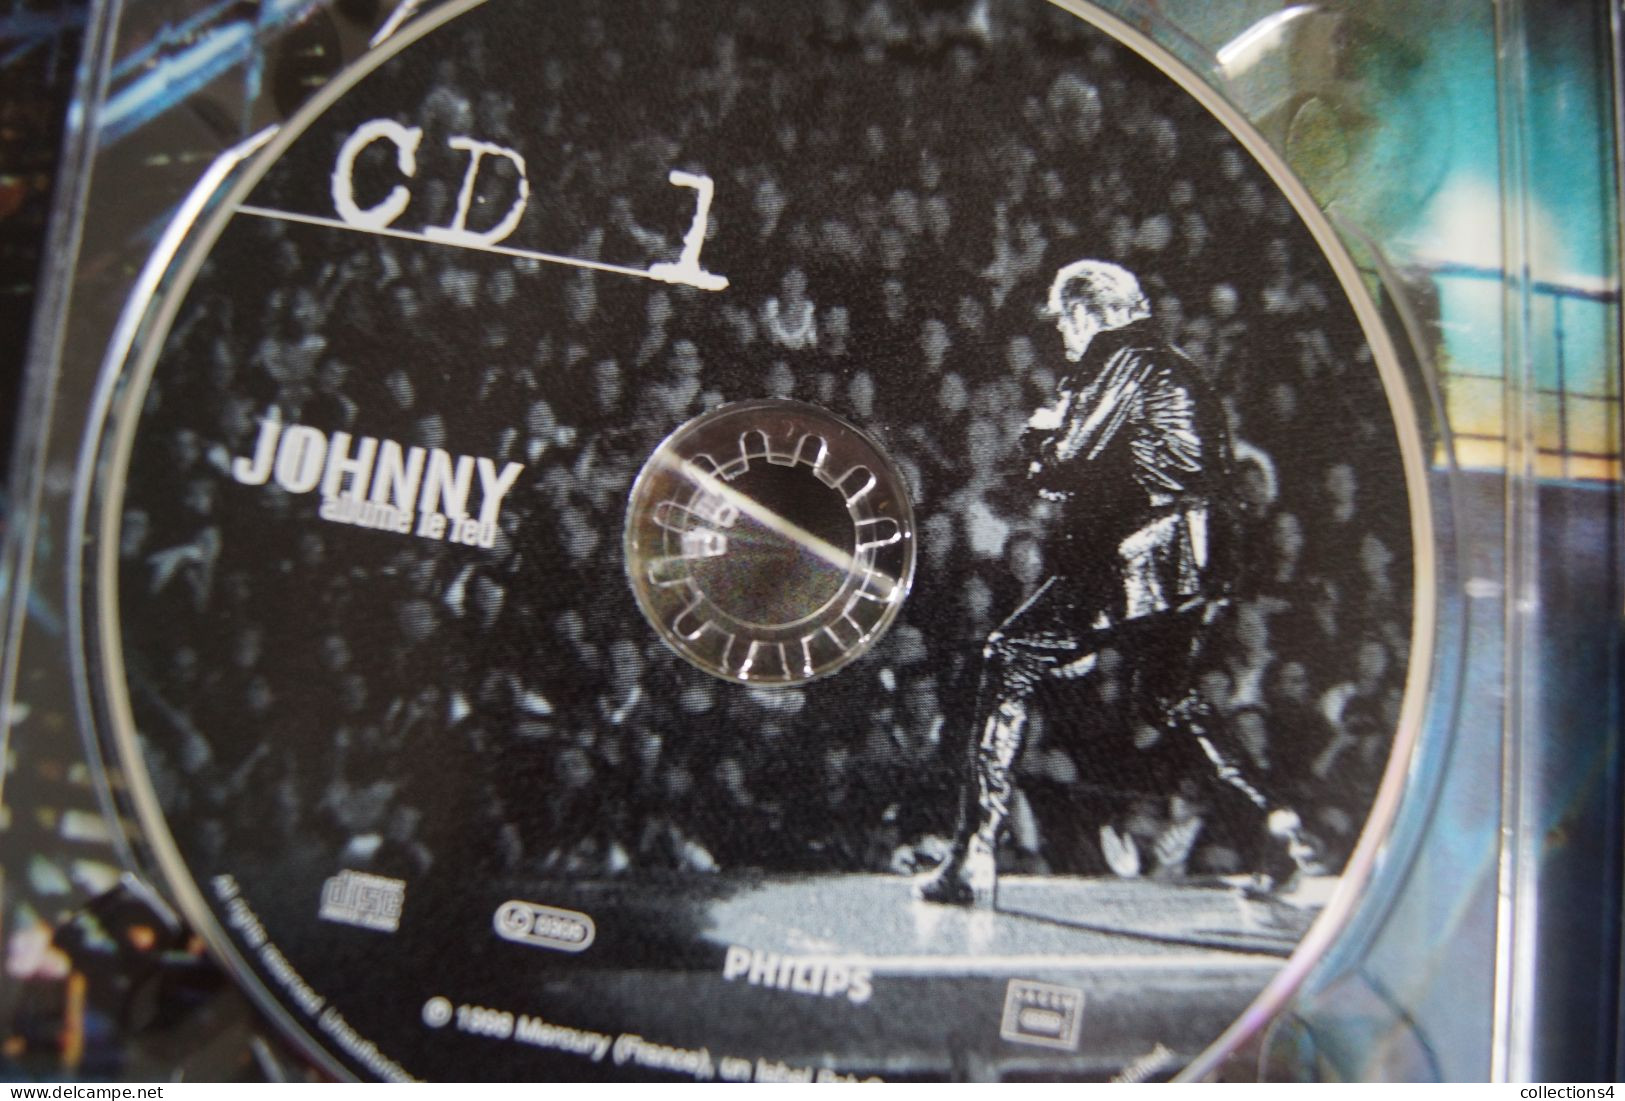 JOHNNY HALLYDAY ALLUME LE FEU STADE DE FRANCE 98 COFFRET EN 3 CD 3 CD NUMEROTE VALEUR++ GOLDMAN OBISPO BRUEL PAGNY - Rock